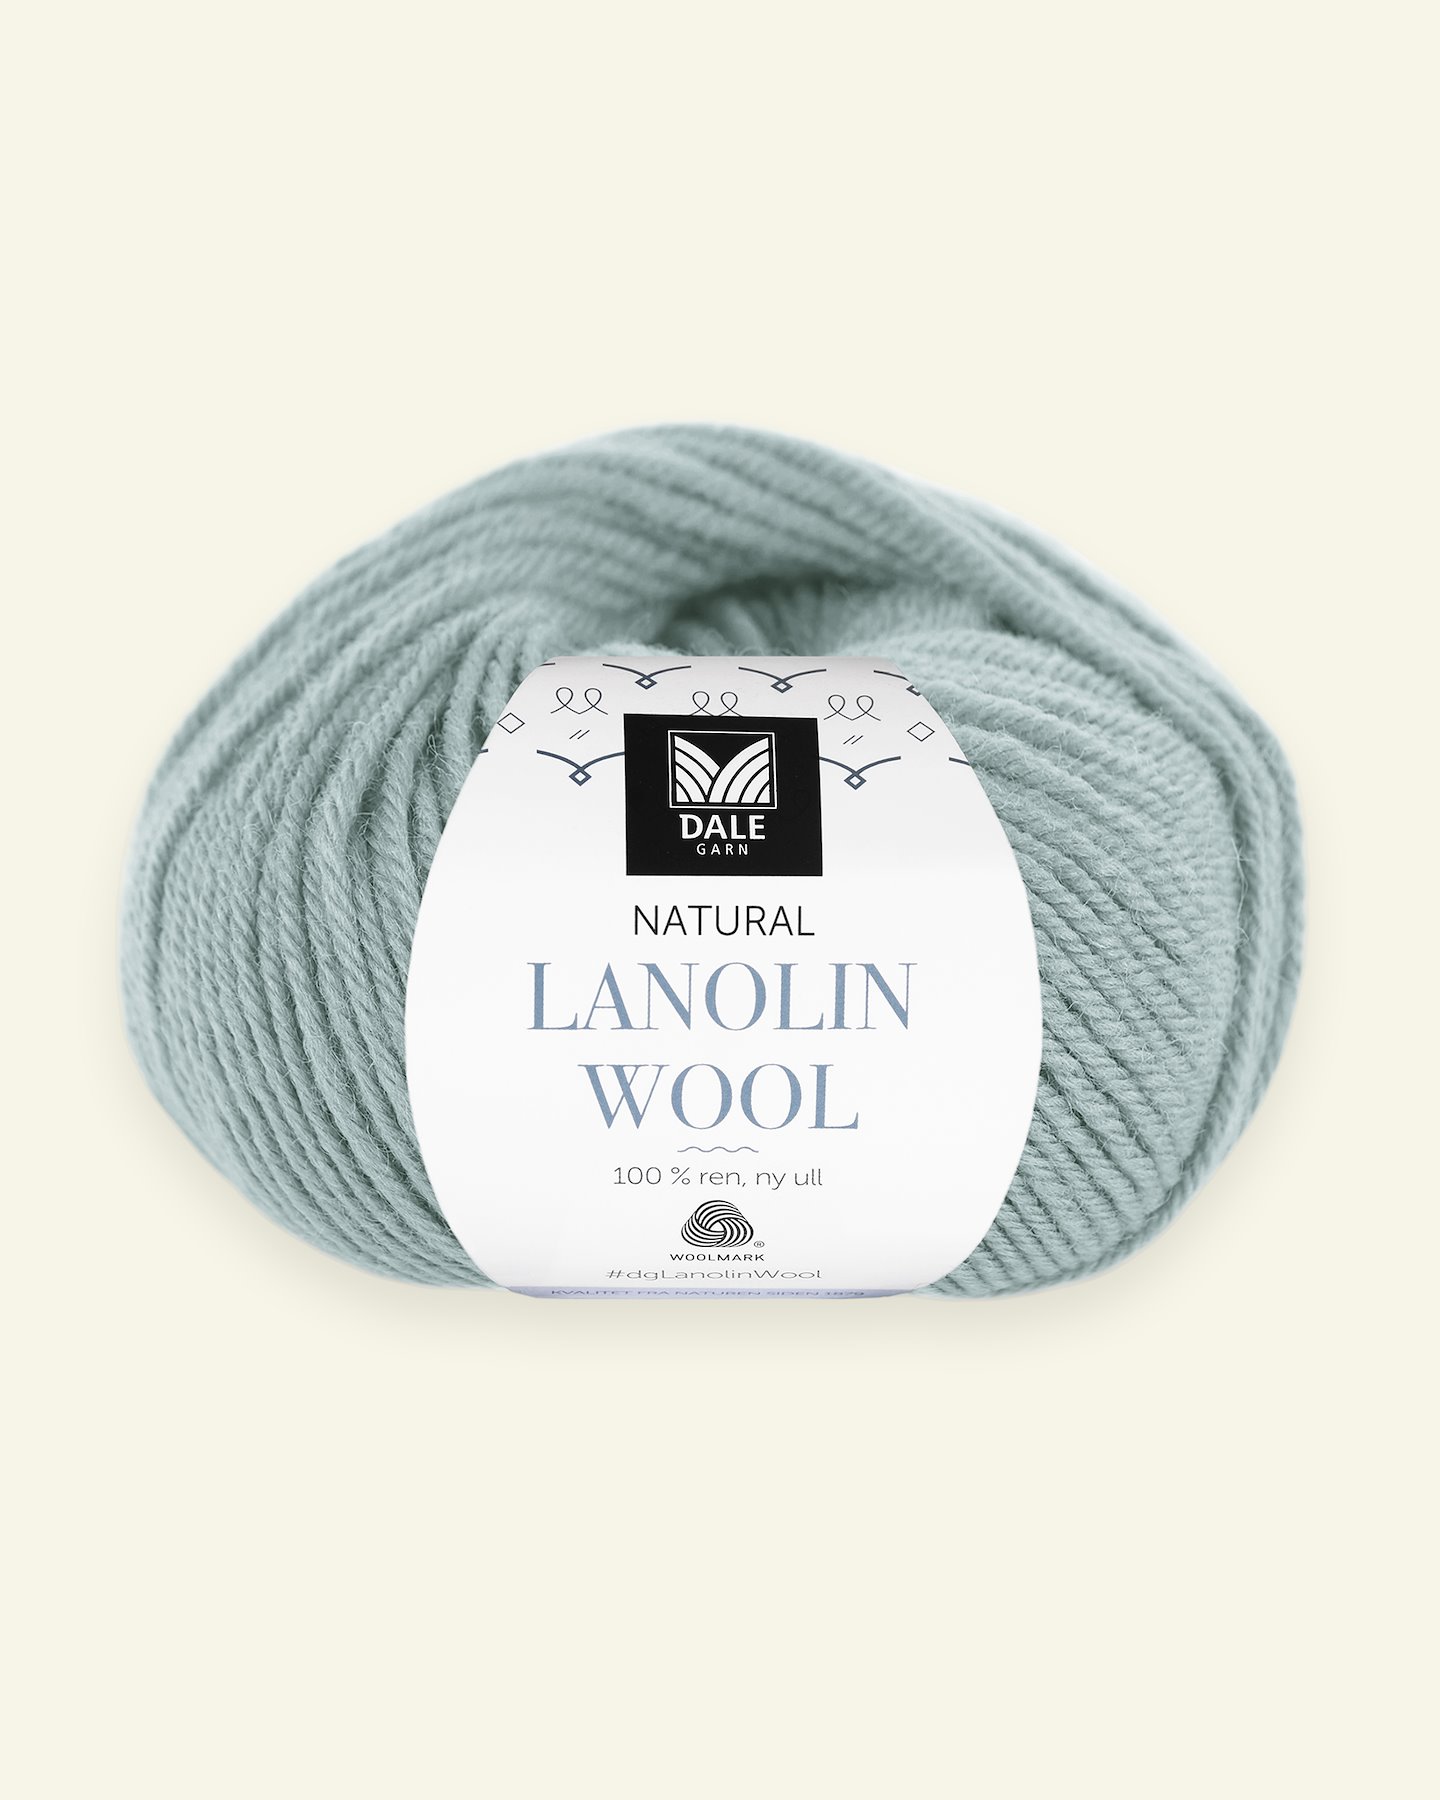 Dale Garn, 100% uldgarn "Lanolin Wool", lys aqua (1460) 90000298_pack